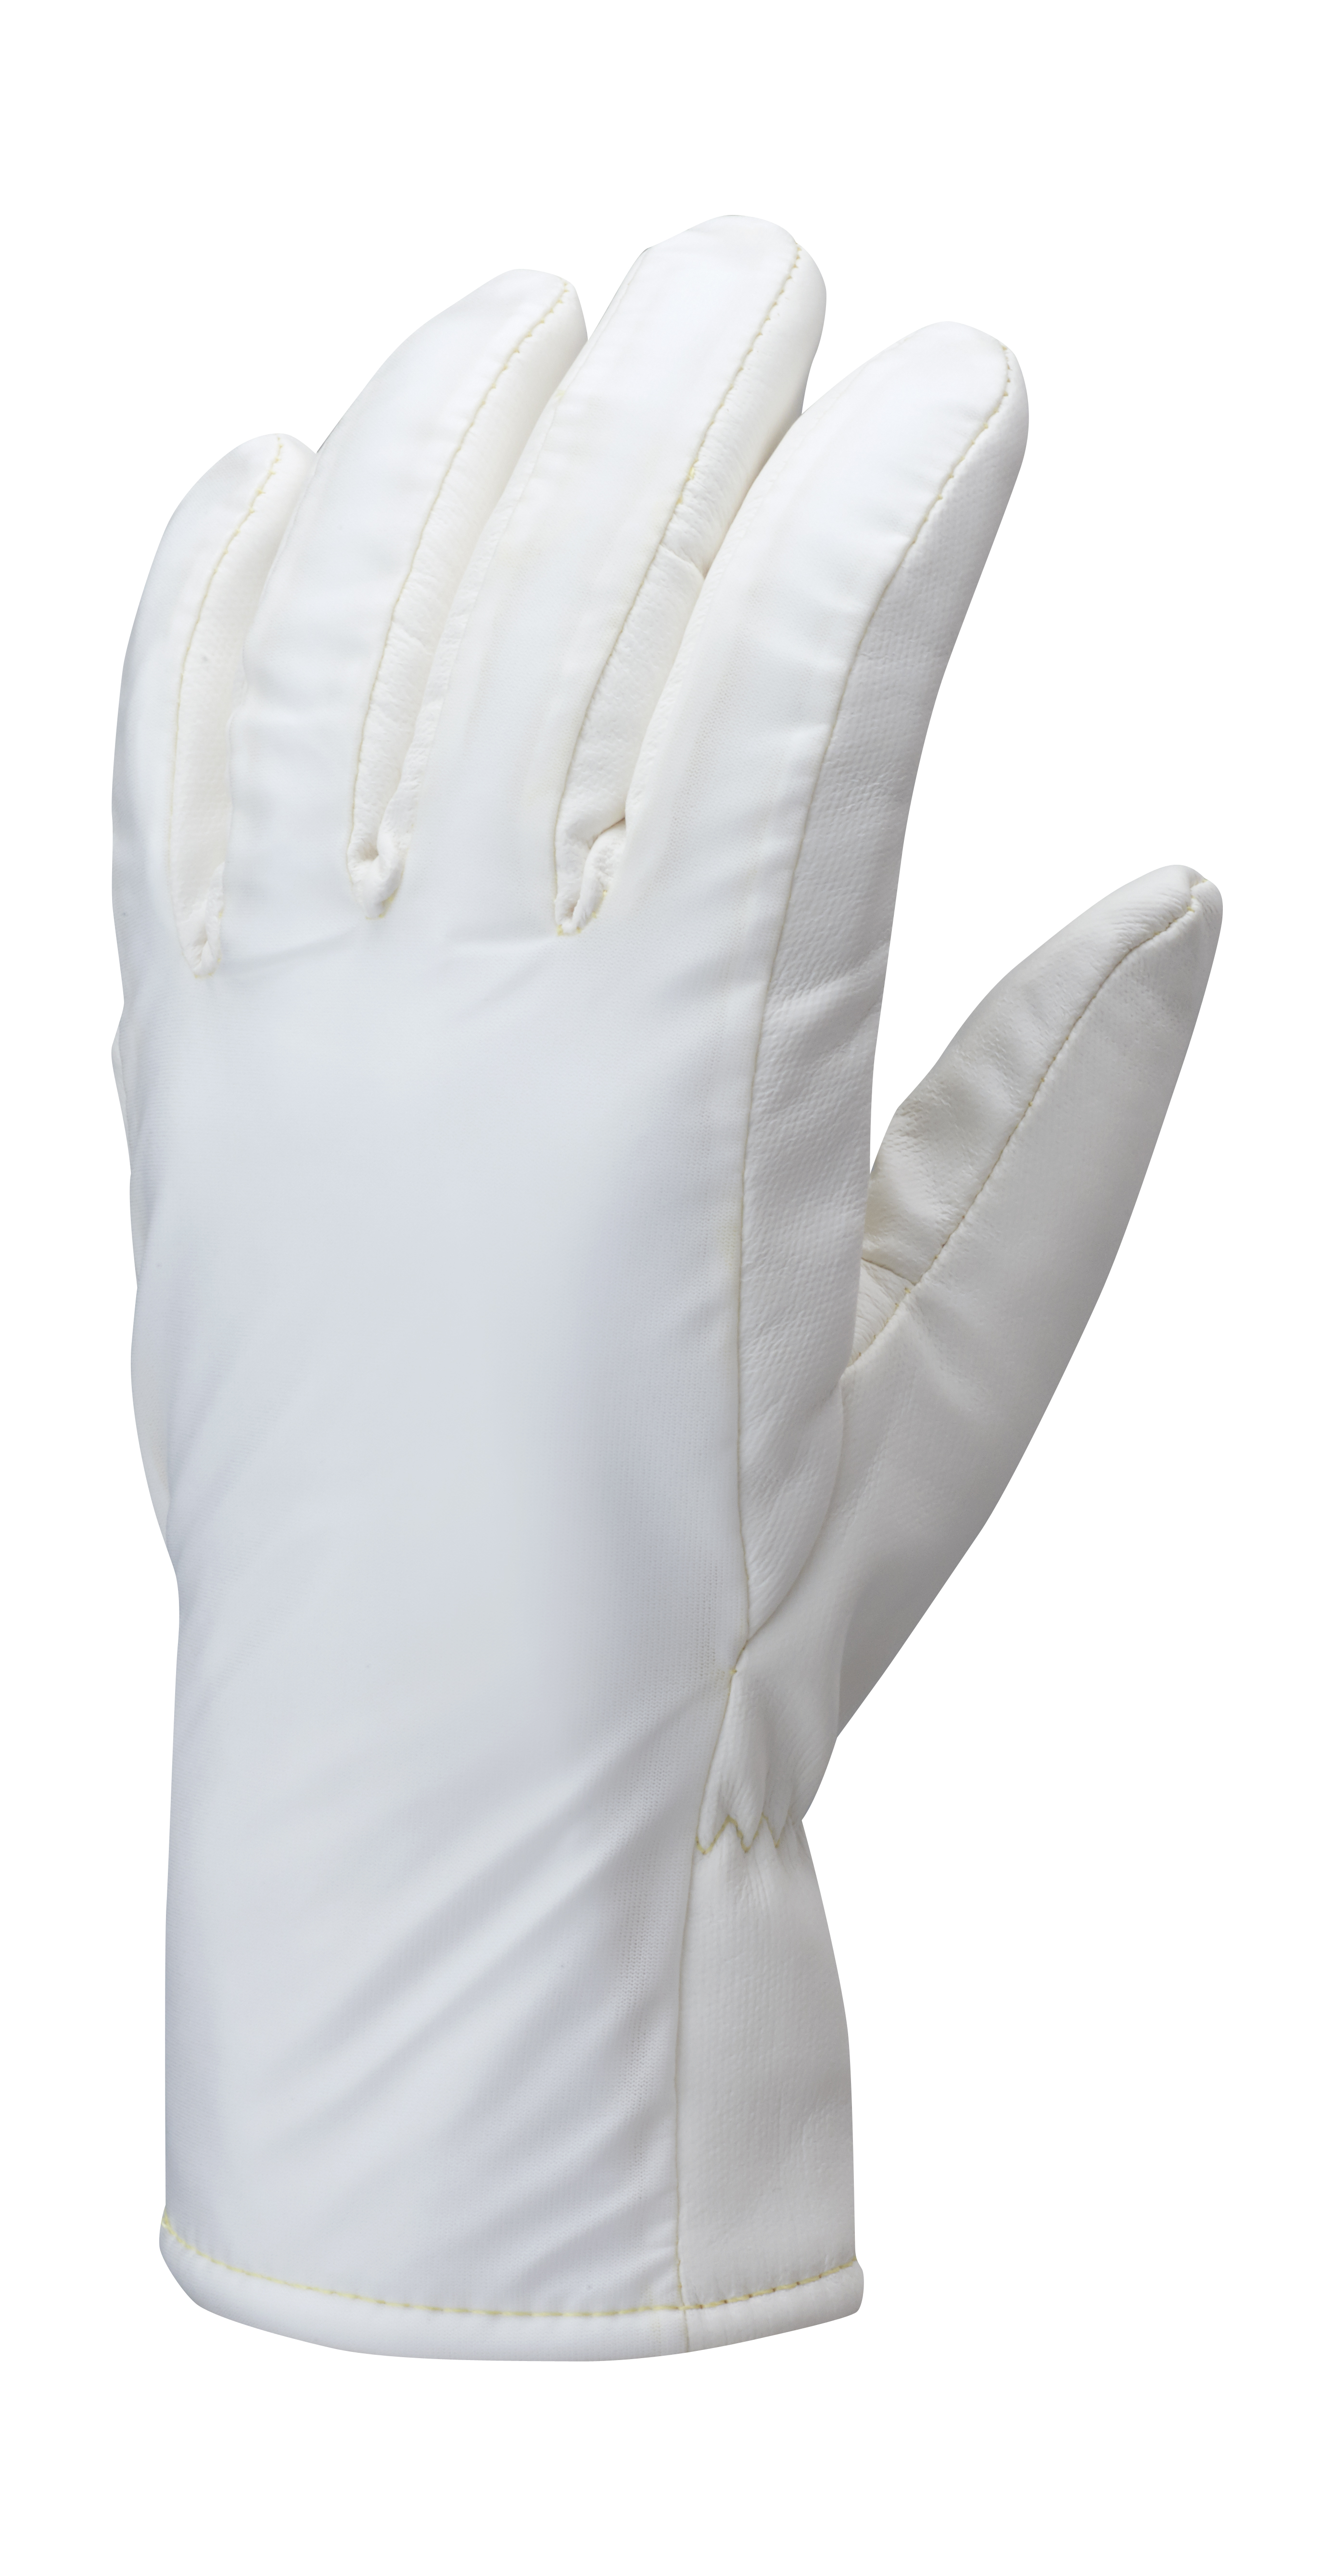 Heat Resistant Gloves "T200"